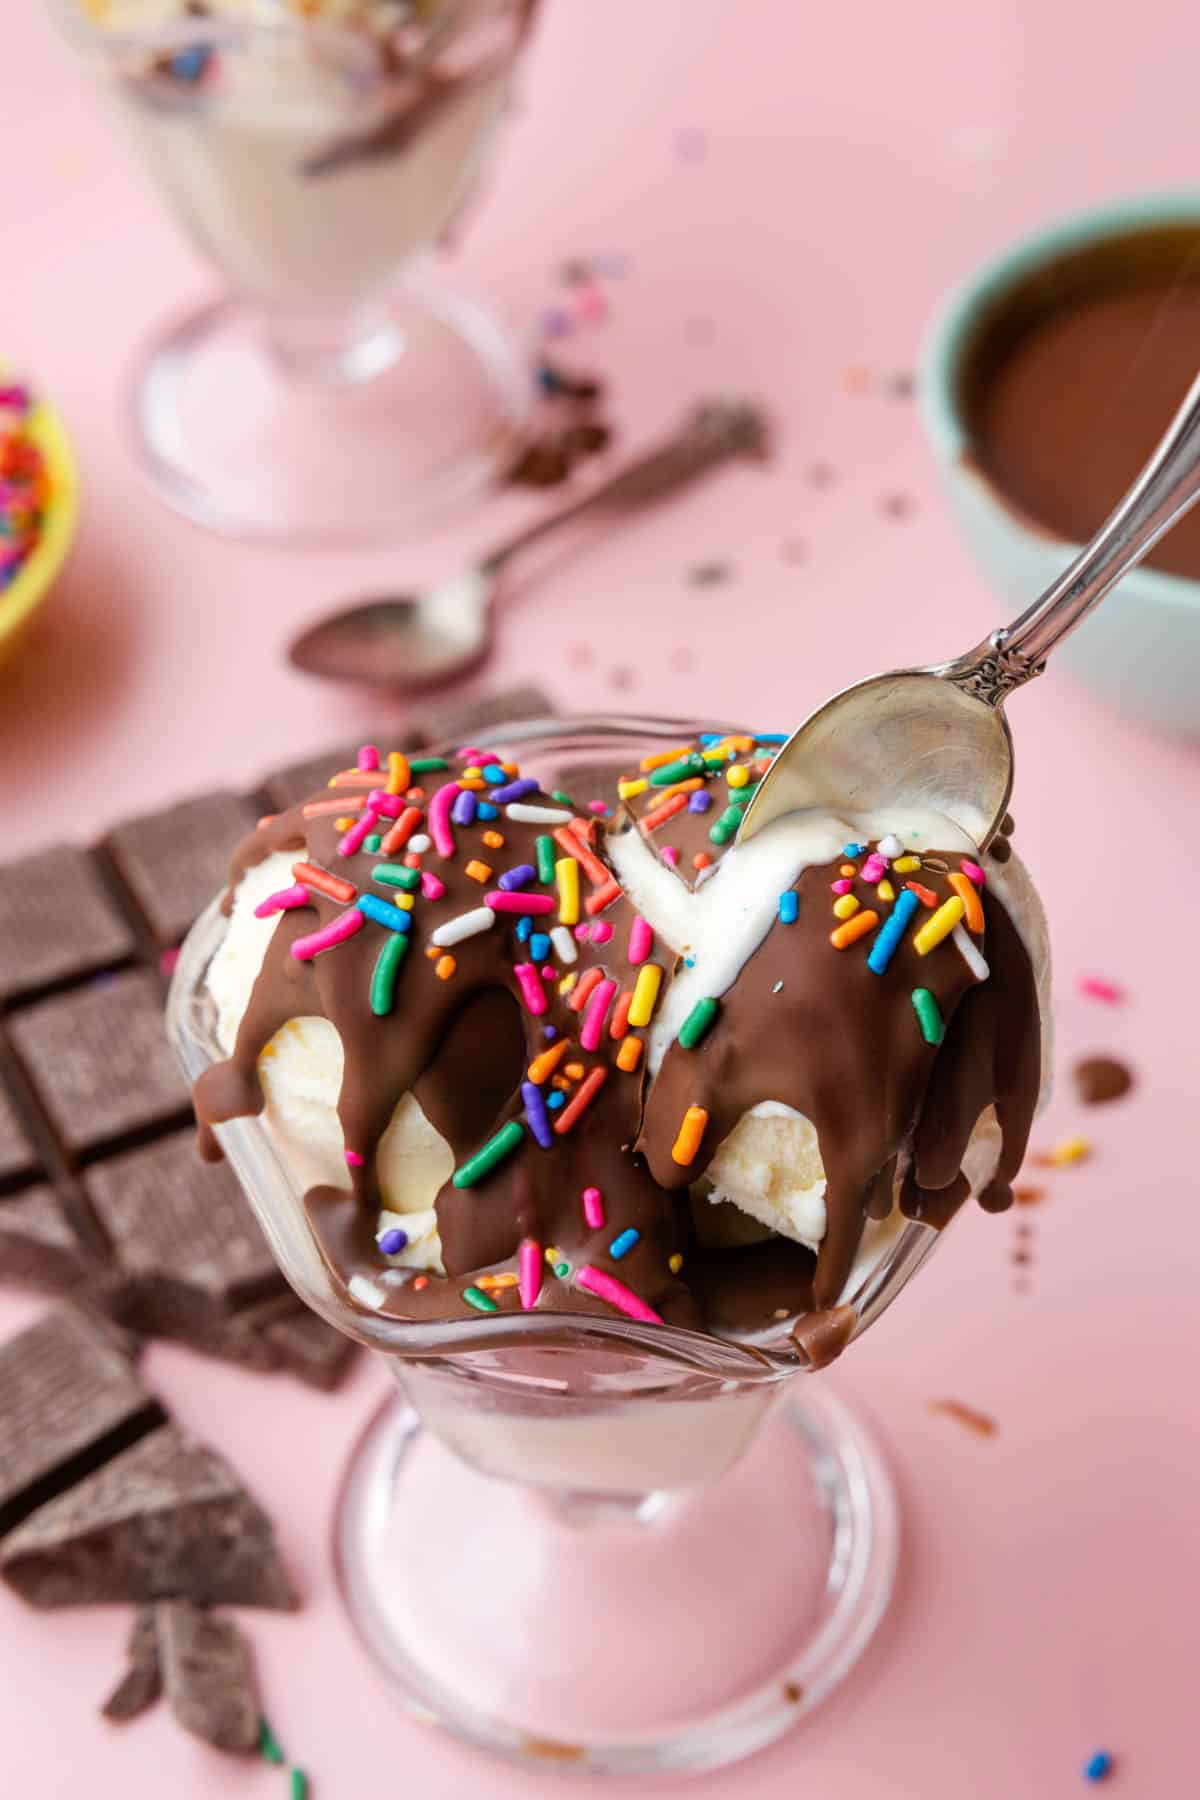 A spoon breaking through homemade chocolate magic shell topping over vanilla ice cream.